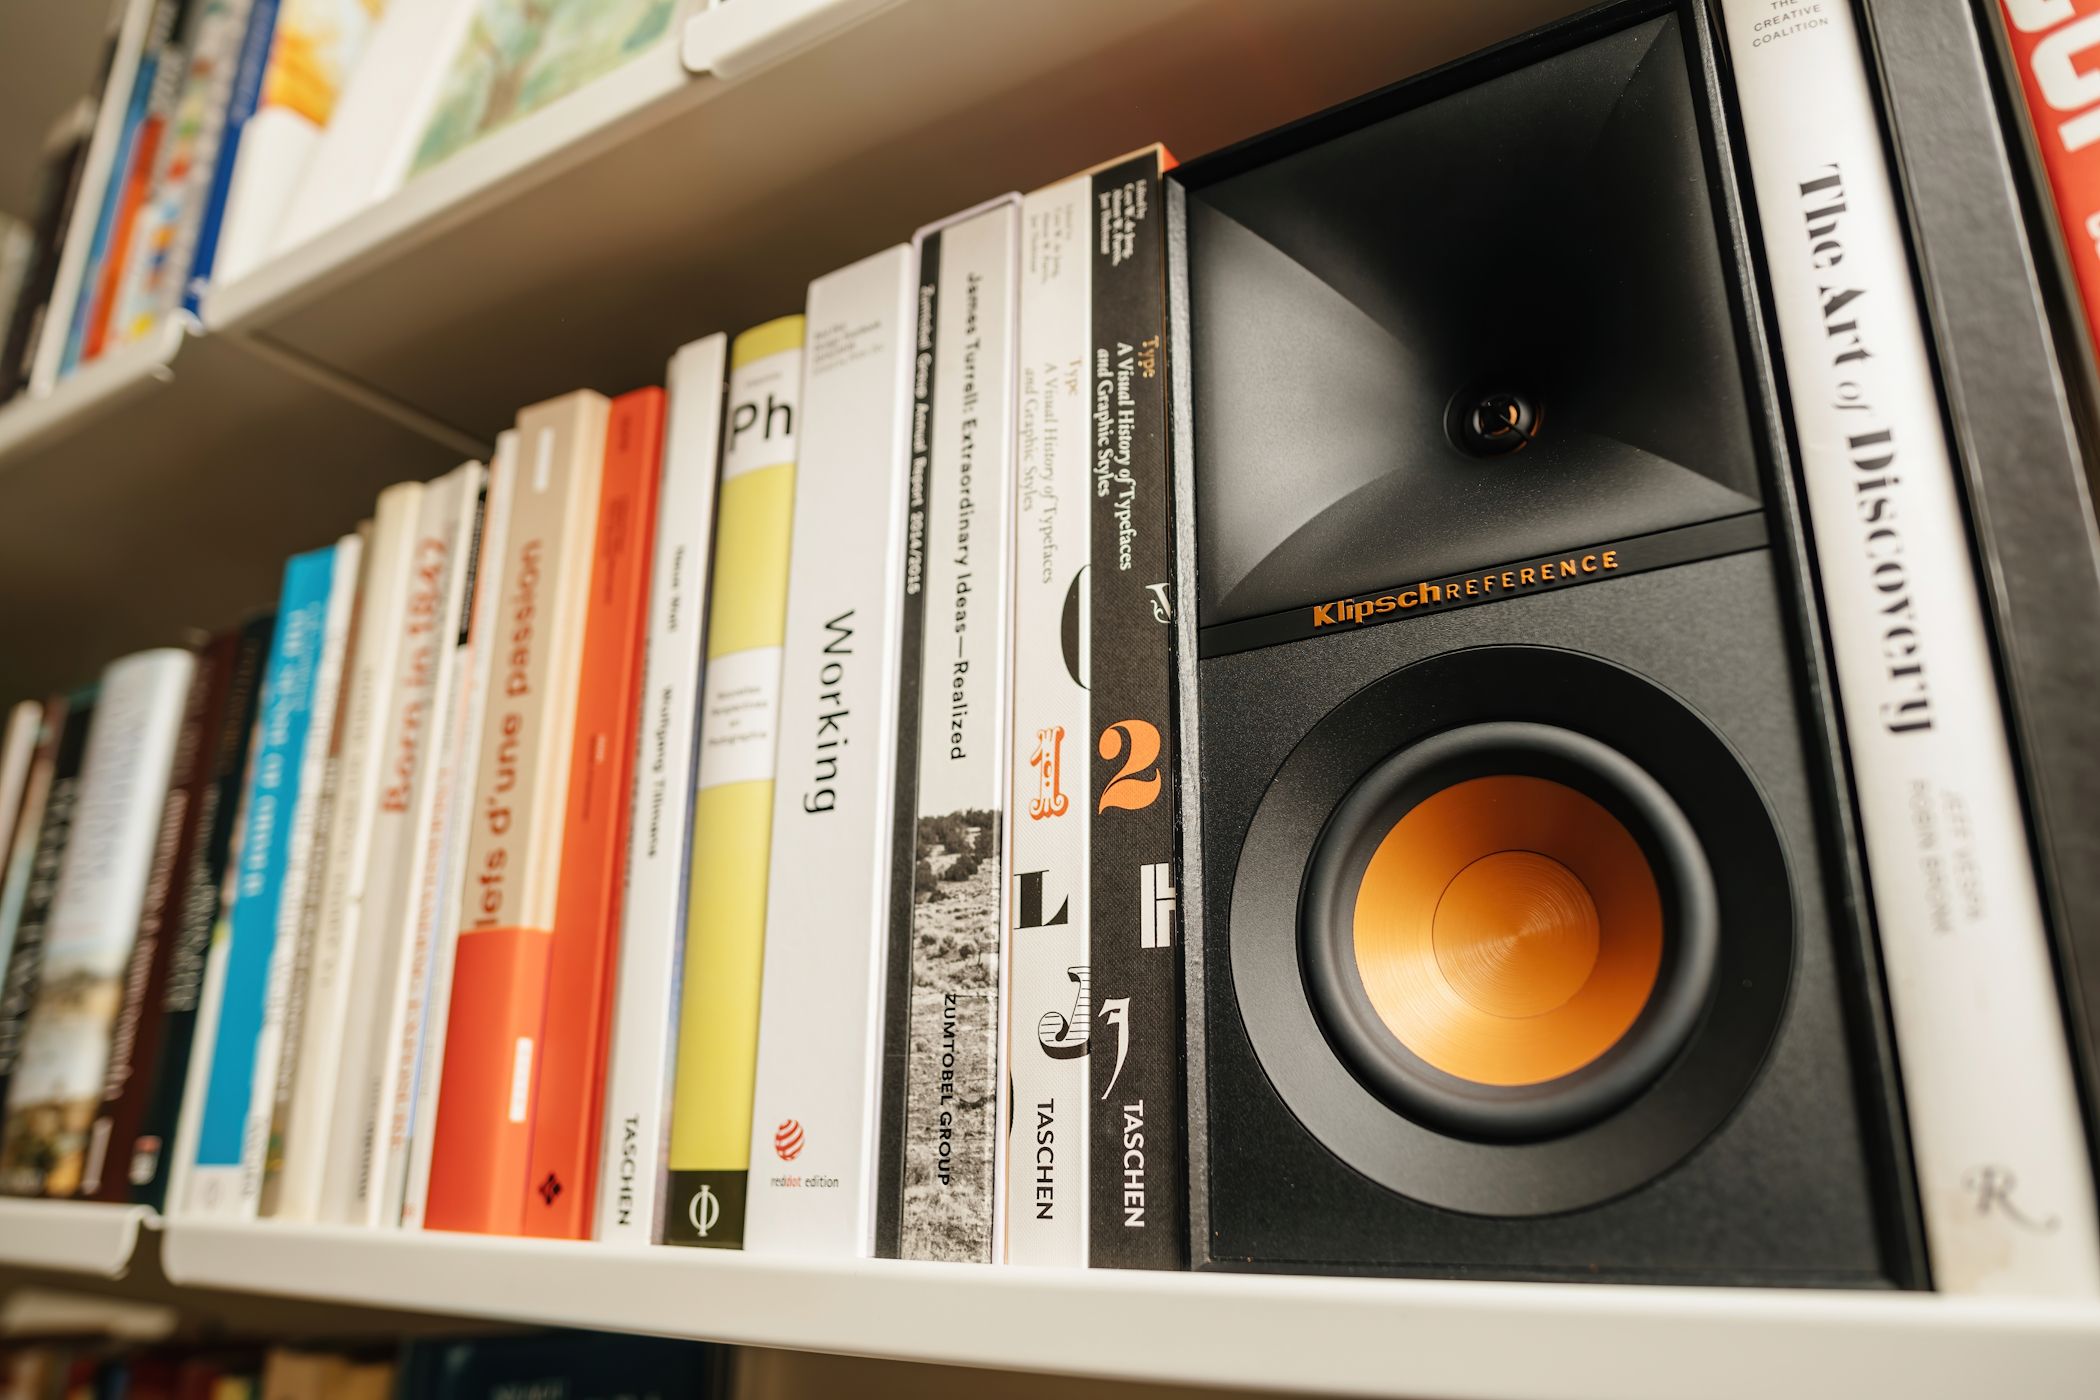 klipsch reference speaker in bookshelf